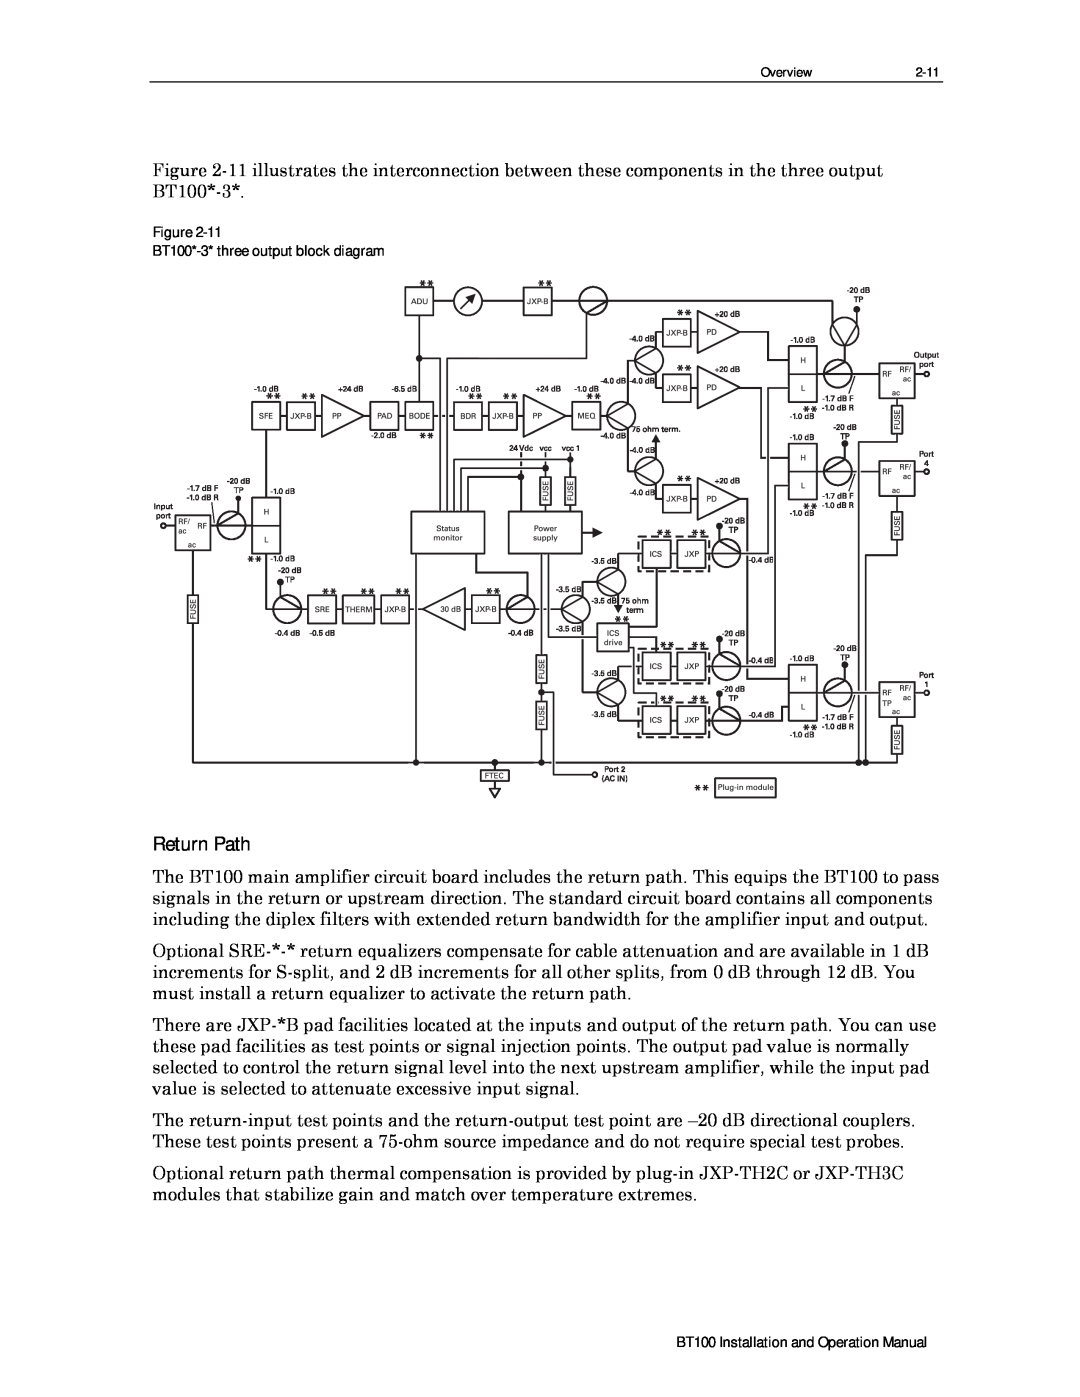 Motorola operation manual Return Path, BT100*-3*three output block diagram 